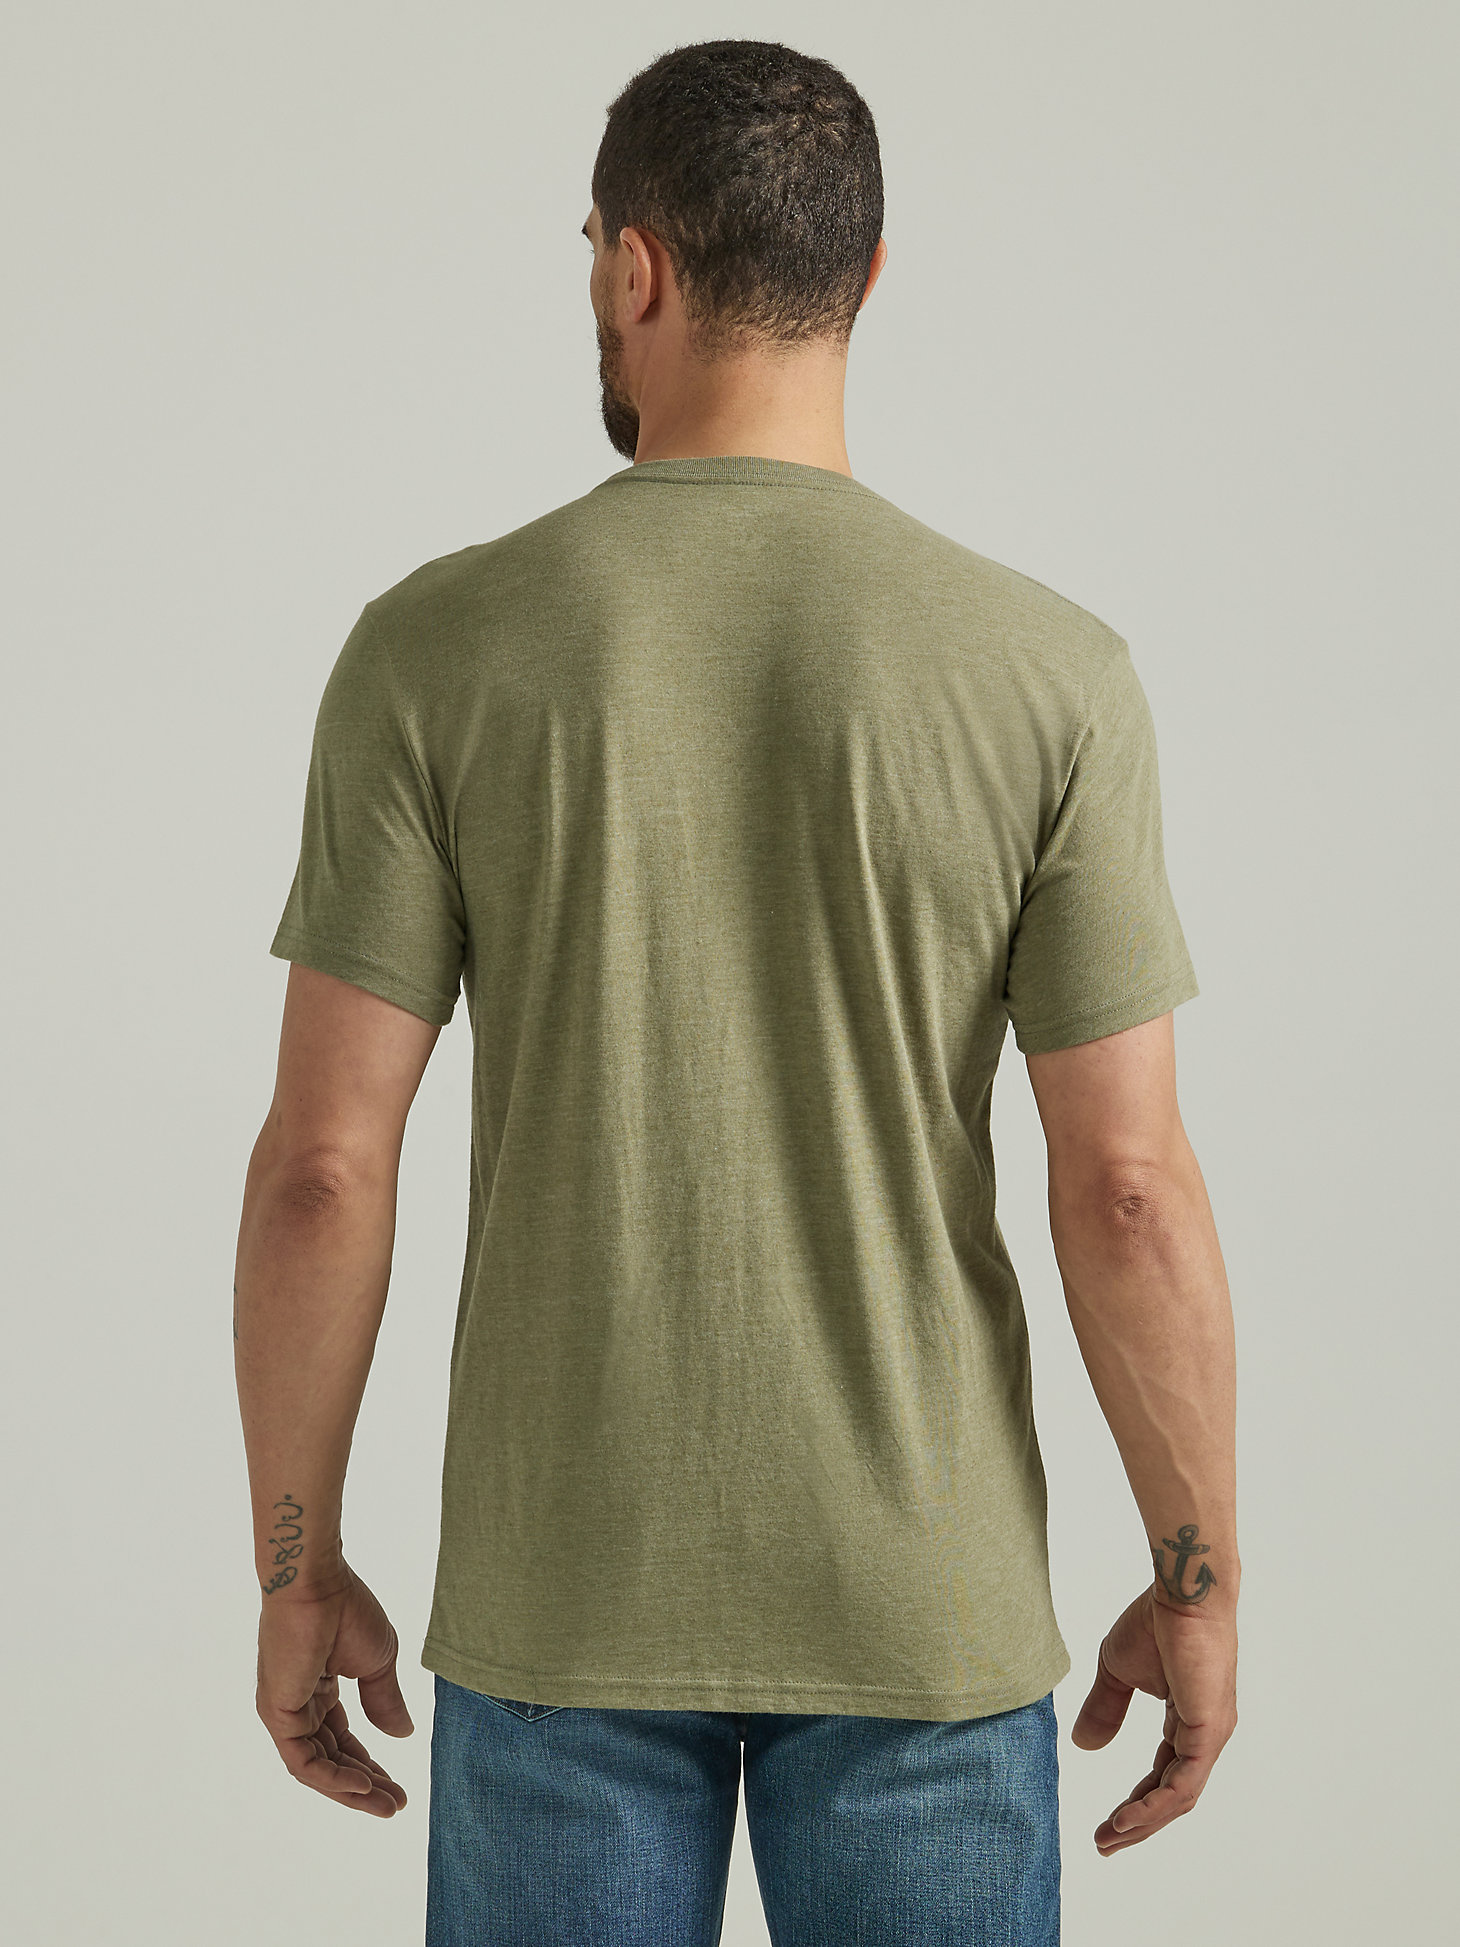 Men's Spirit of the West T-Shirt in Deep Linchen Green alternative view 1